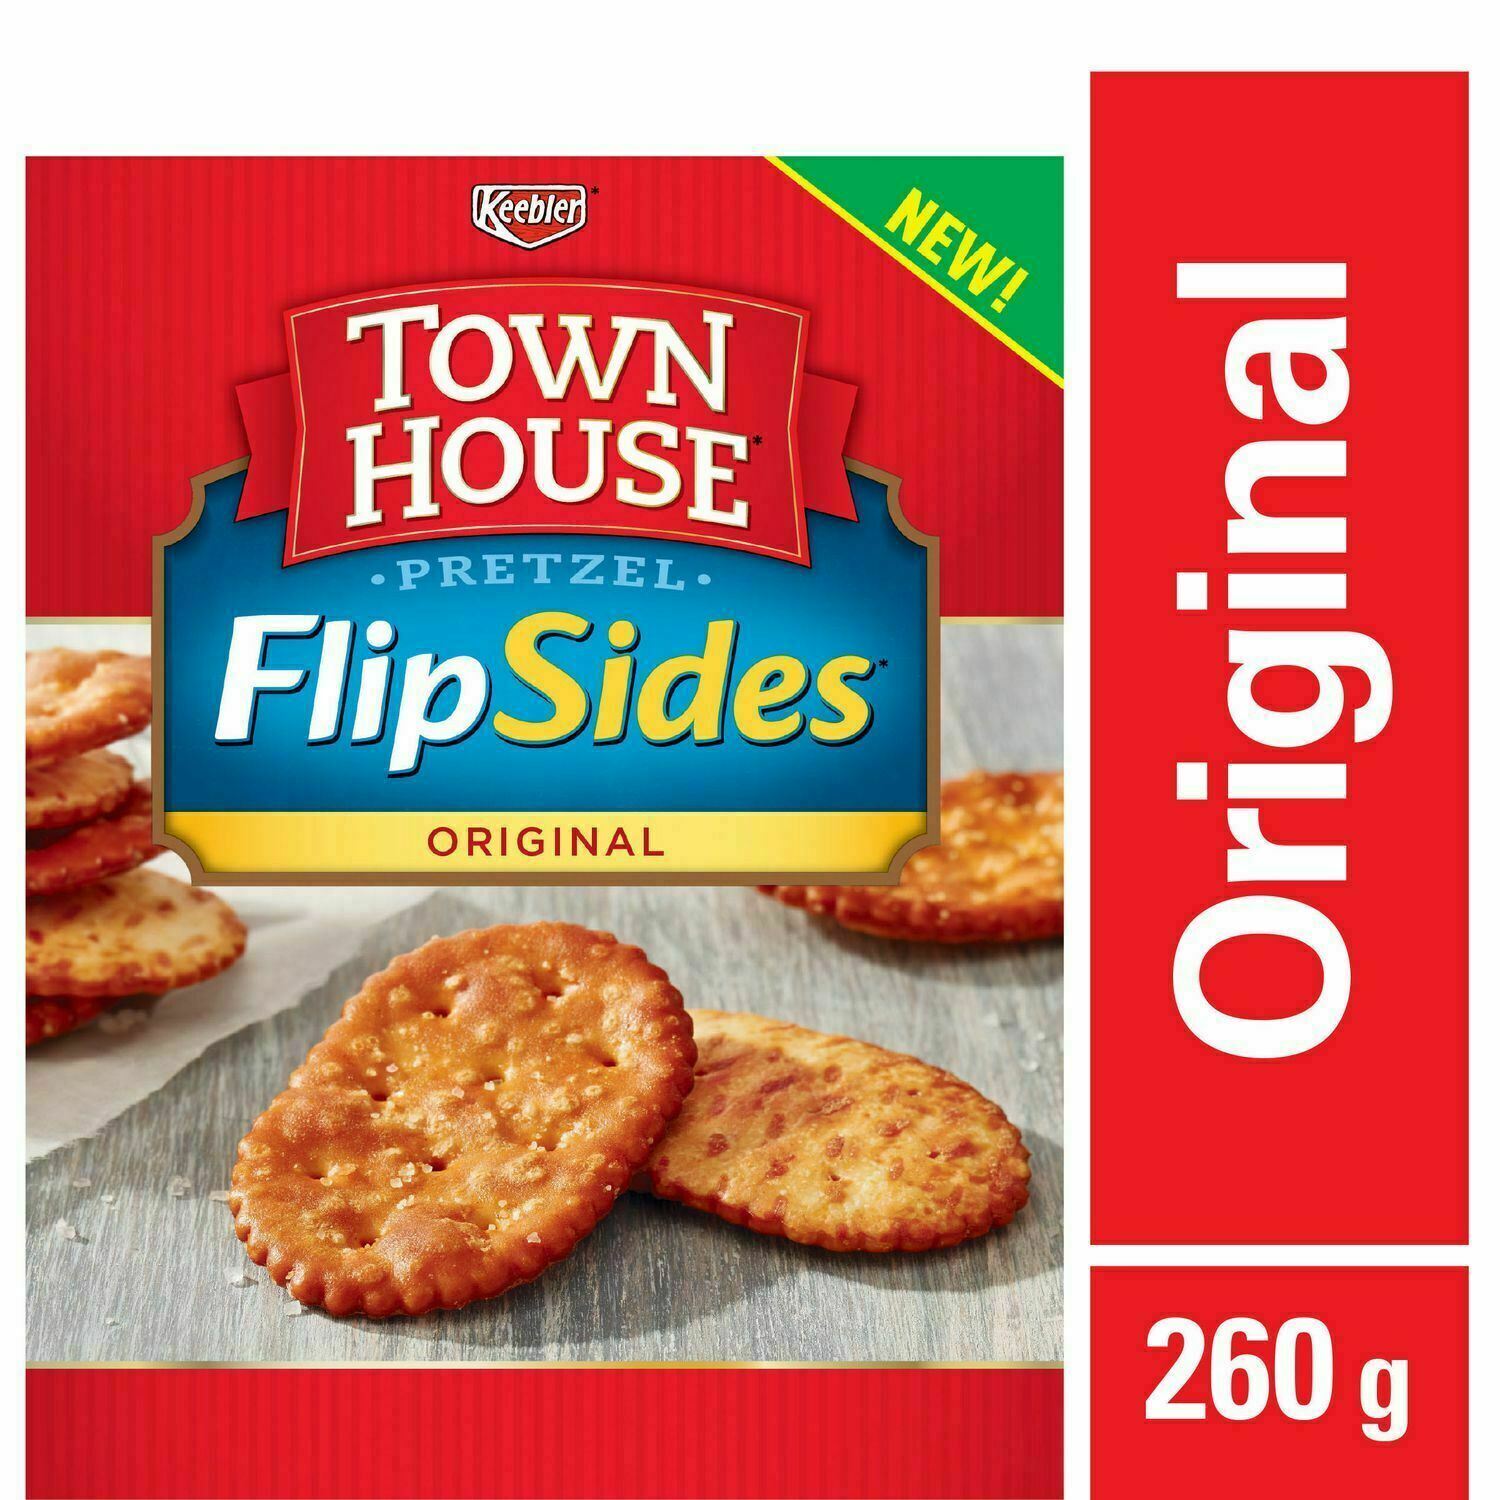 Keebler Town House Flipsides Original Crackers, 260g/9.2 Oz Snacks